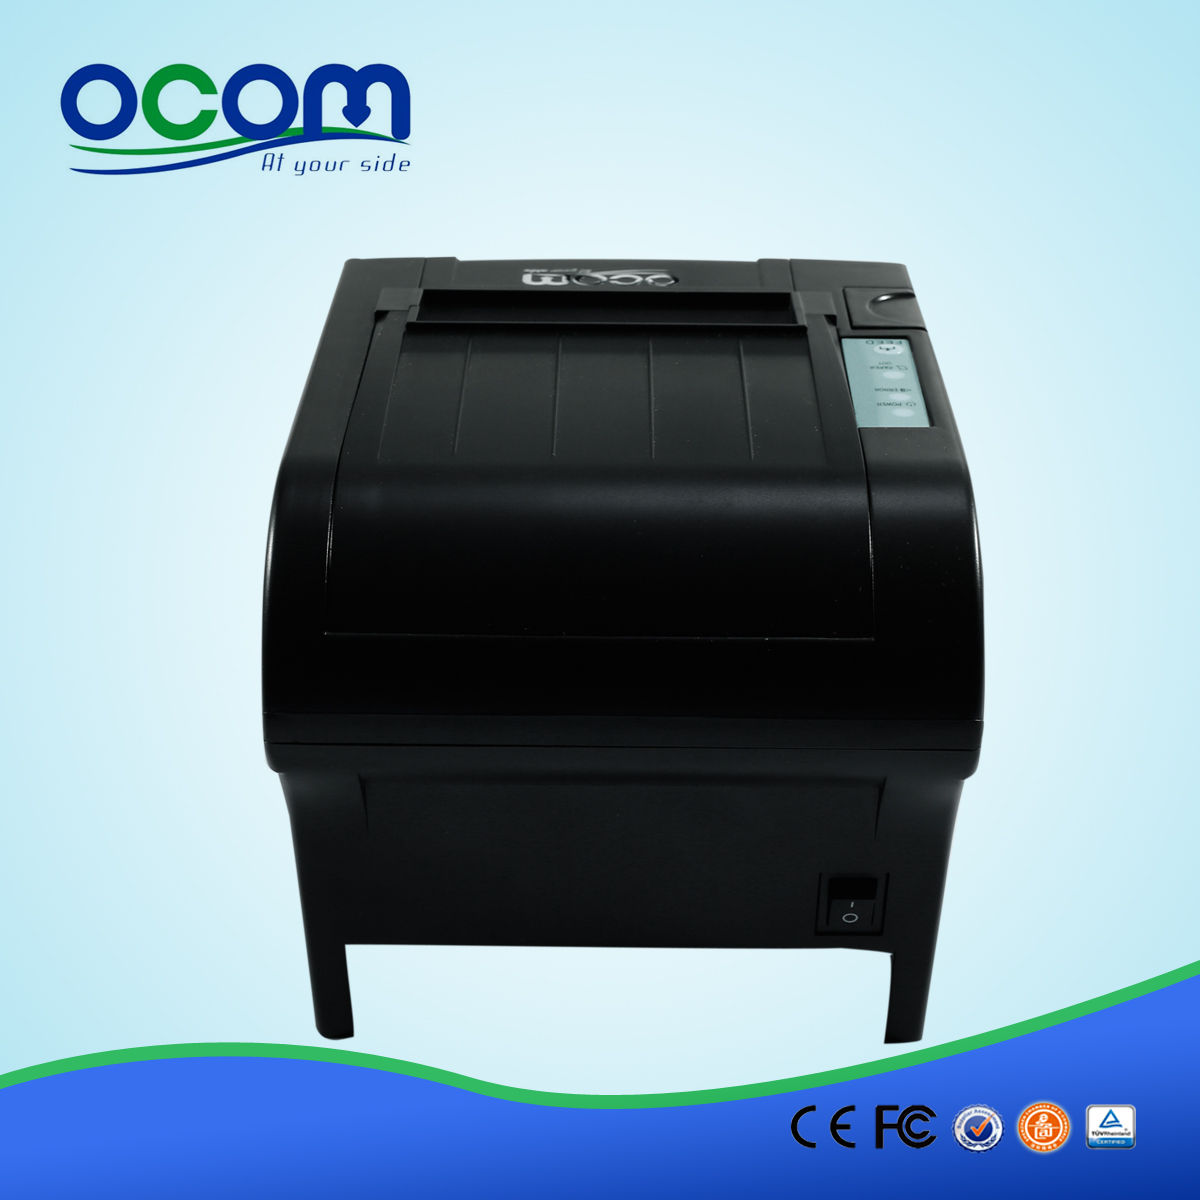 Classical 80mm  Wifi Thermal Receipt Printer OCPP-806-W